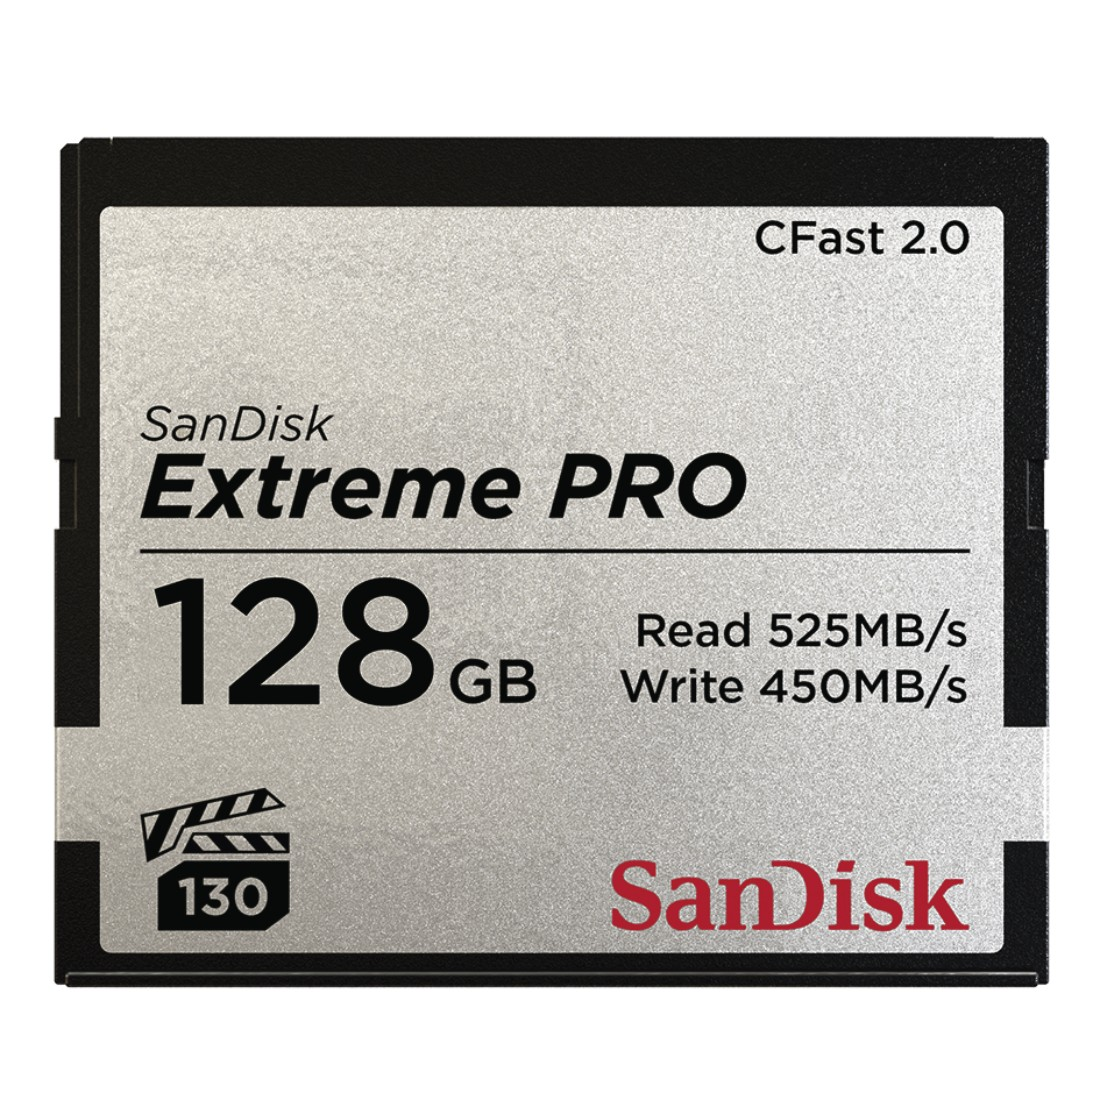 SANDISK Extreme PRO®, CFast 2.0 128 MB/s 525 GB, Speicherkarte